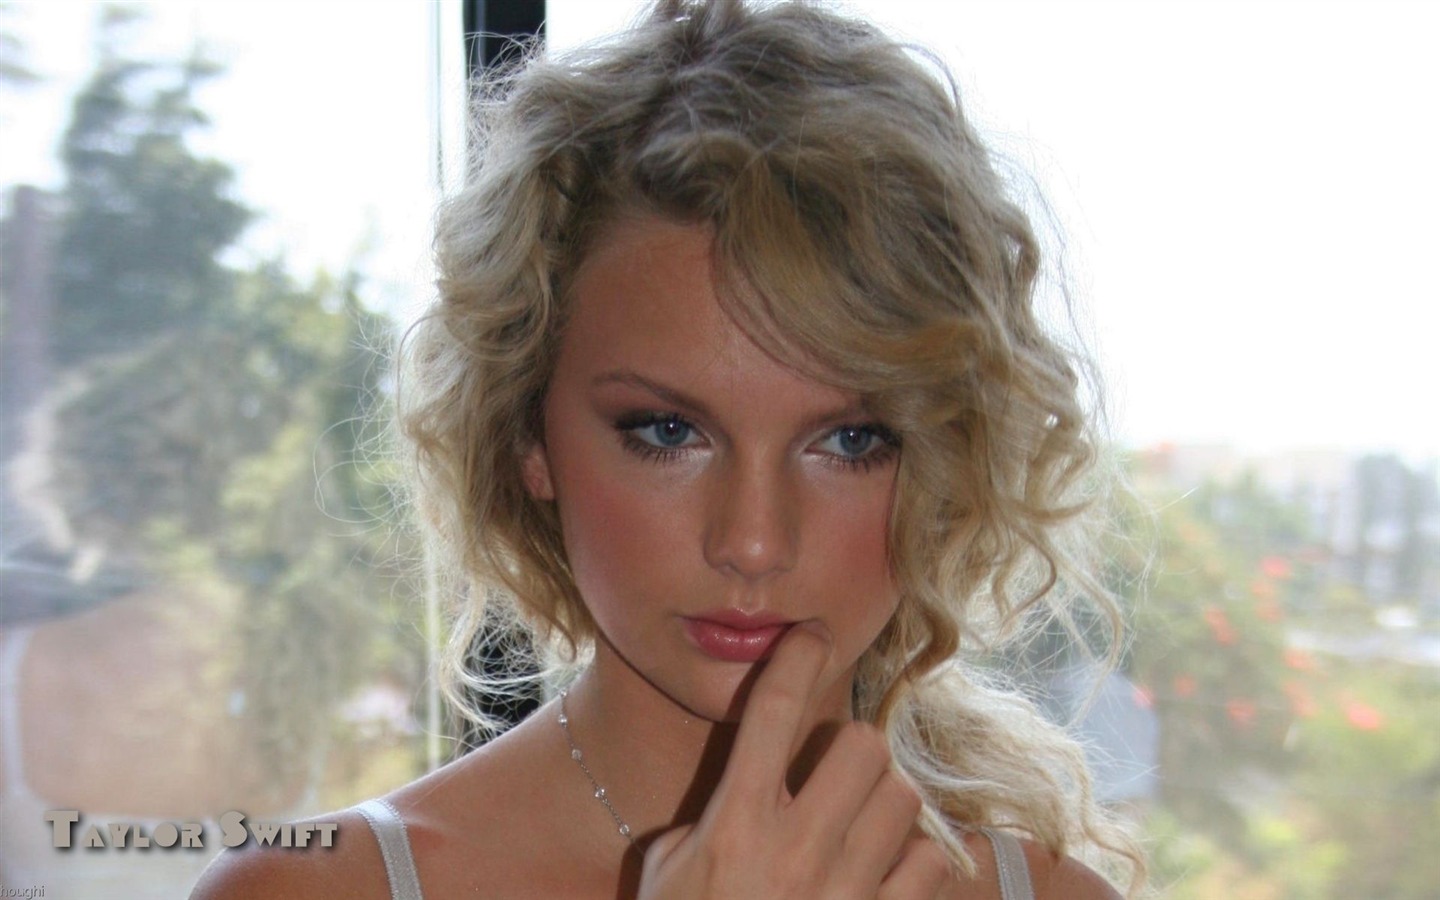 Taylor Swift 泰勒·斯威芙特 美女壁紙 #32 - 1440x900